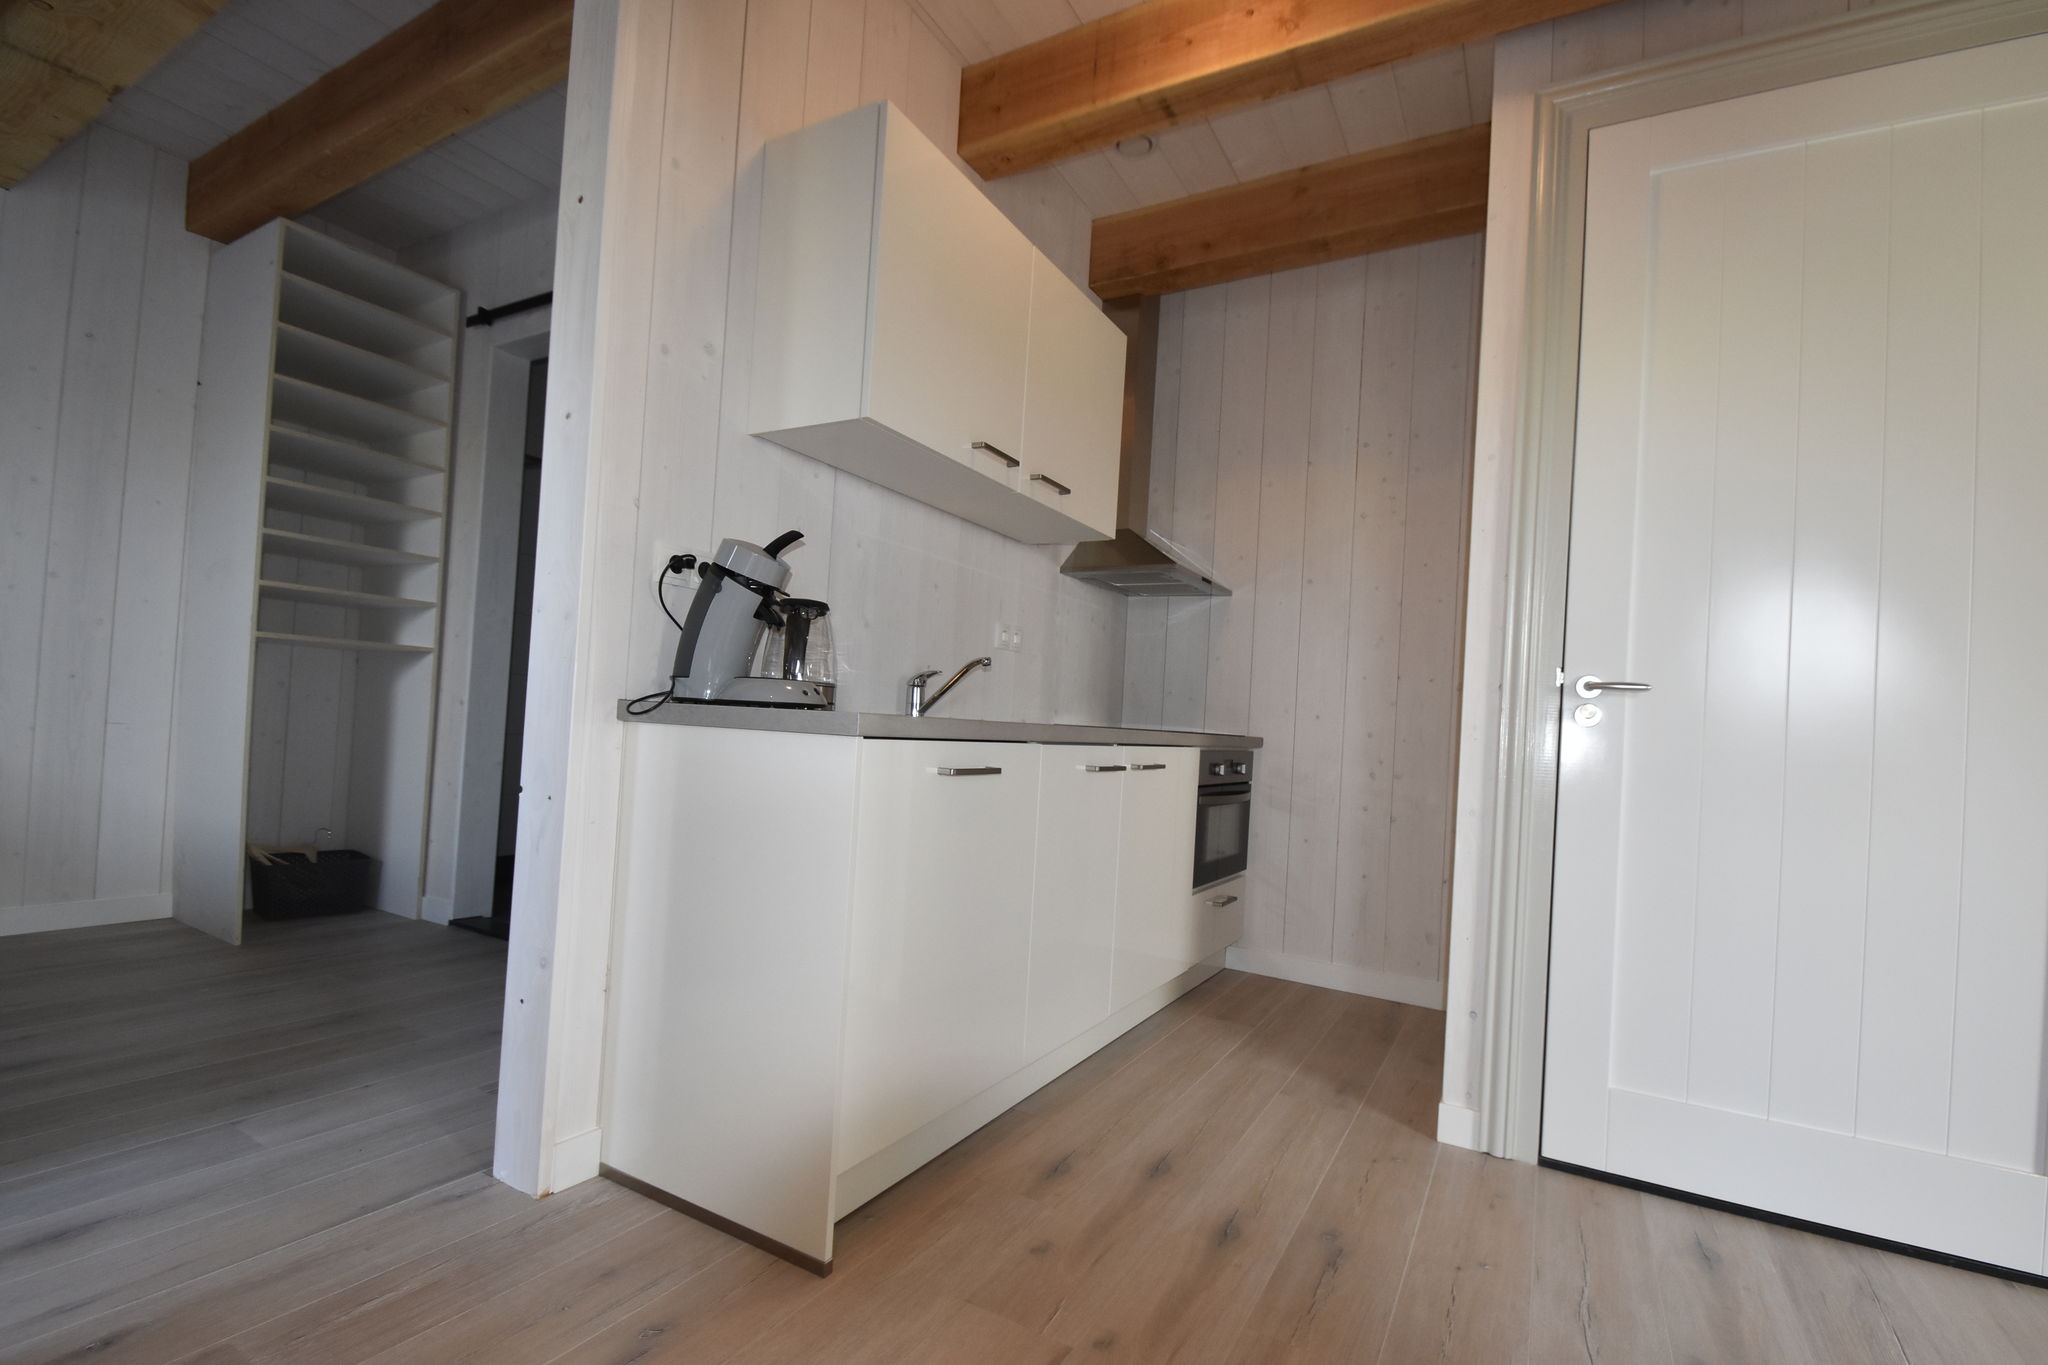 Apartment in Callantsoog with sauna